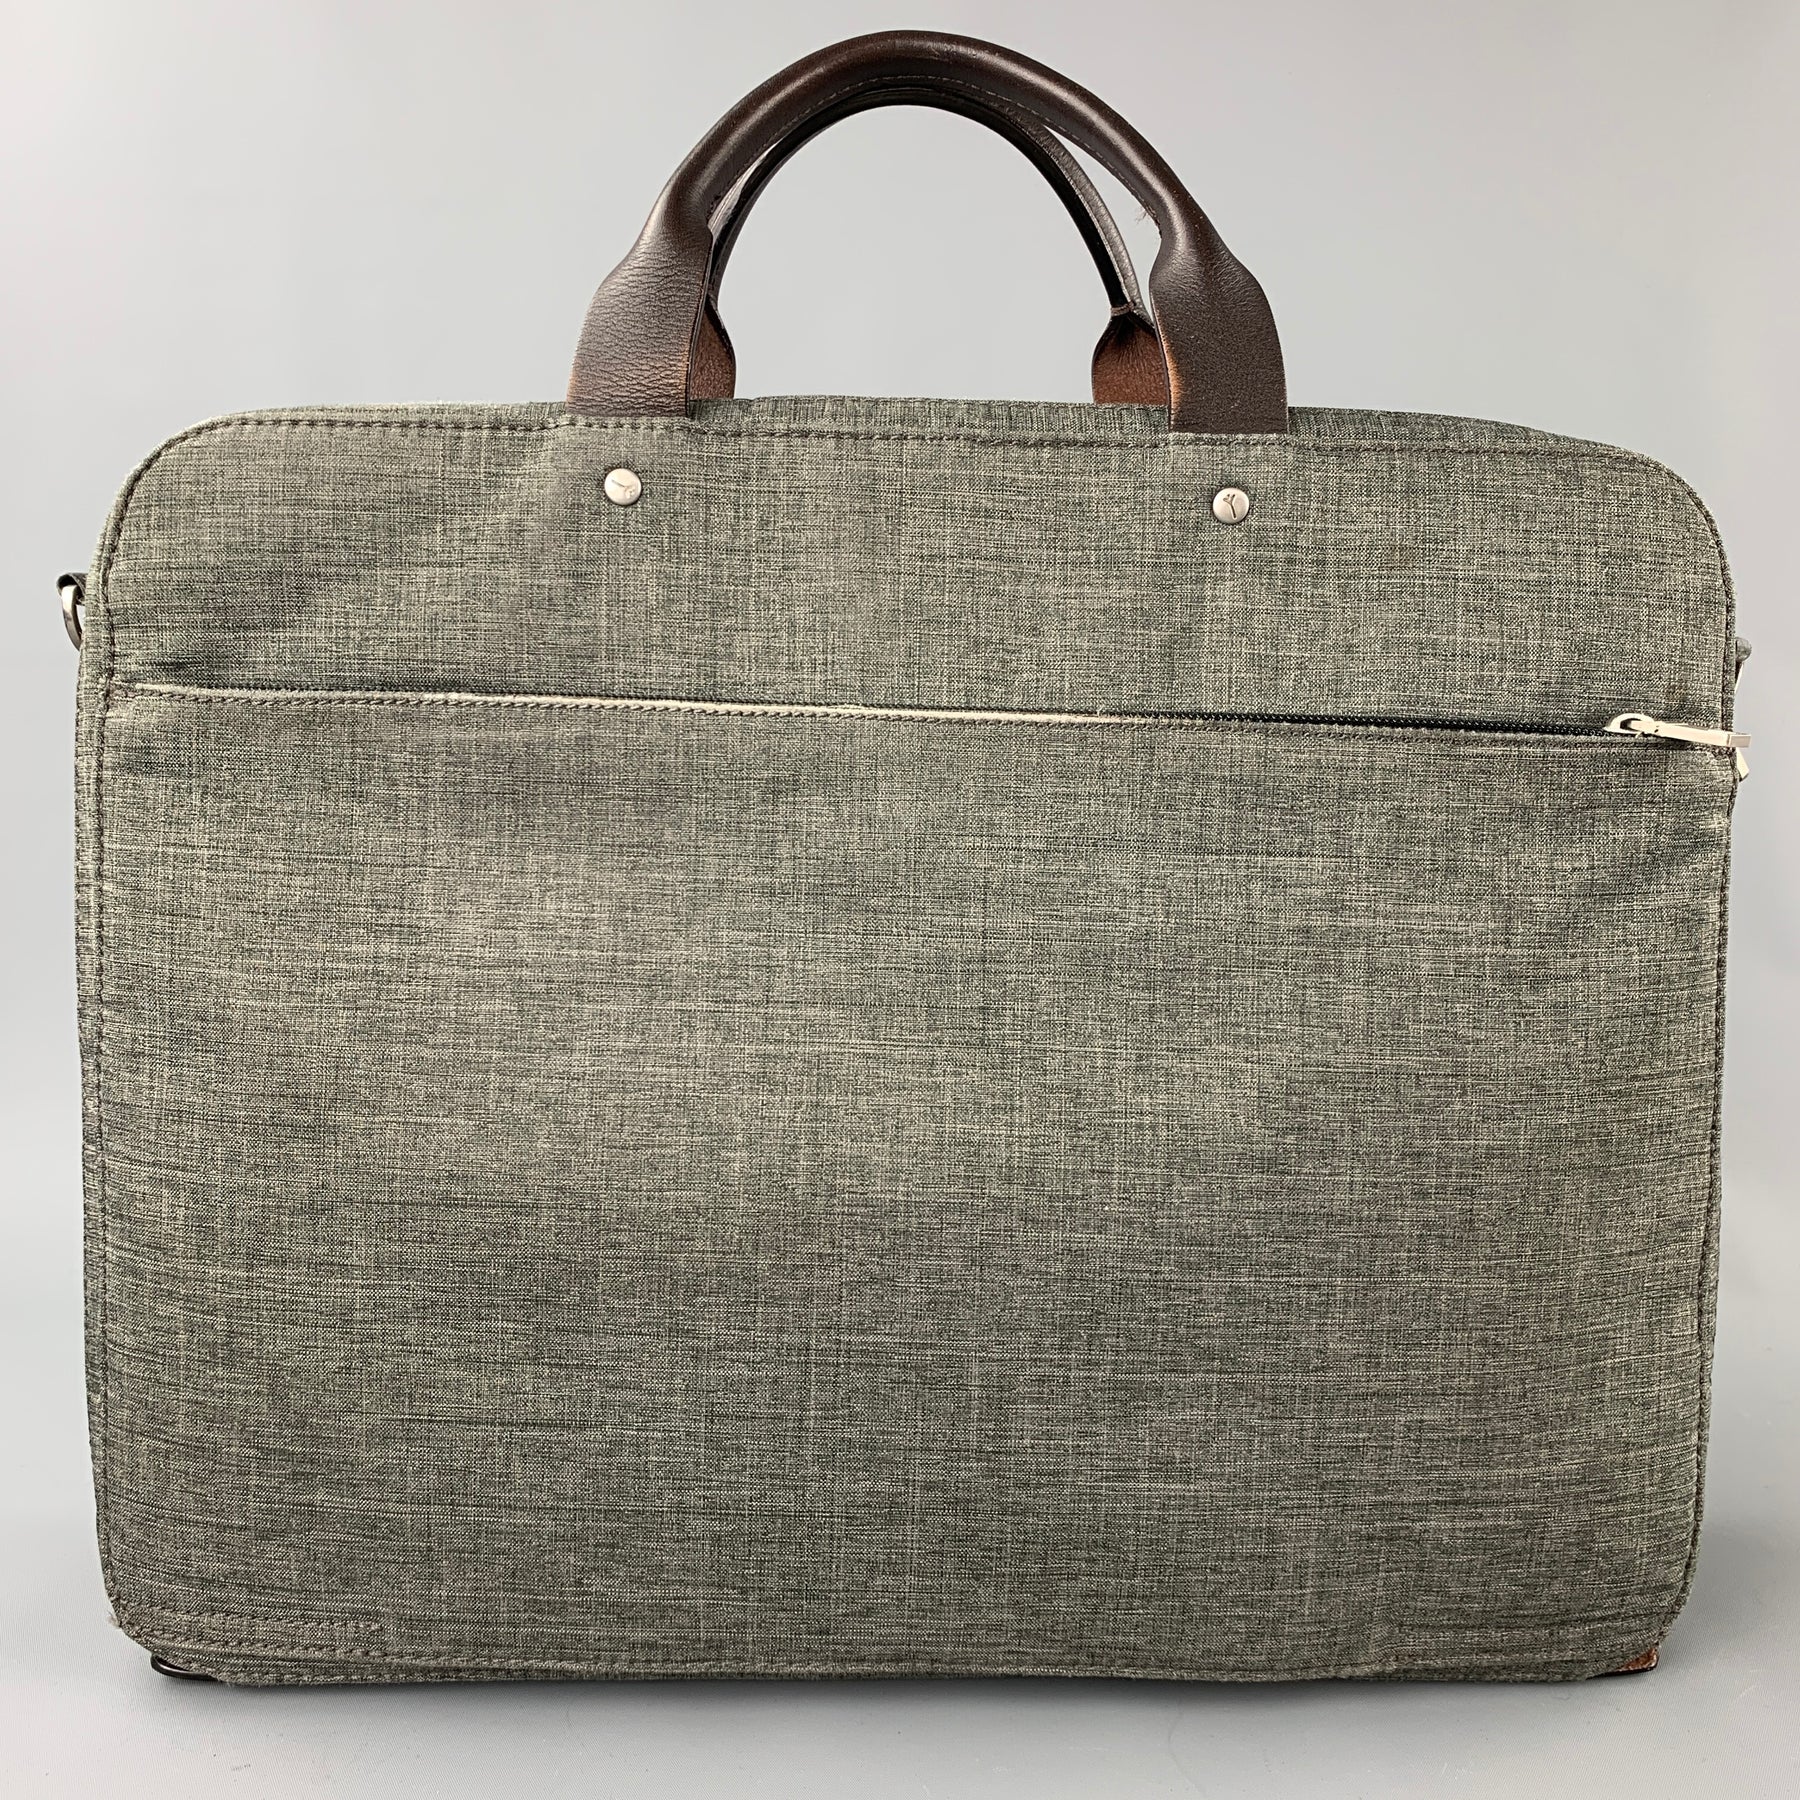 Jack Spade Leather Trimmed Gray Canvas Laptop Bag Excellent Cond